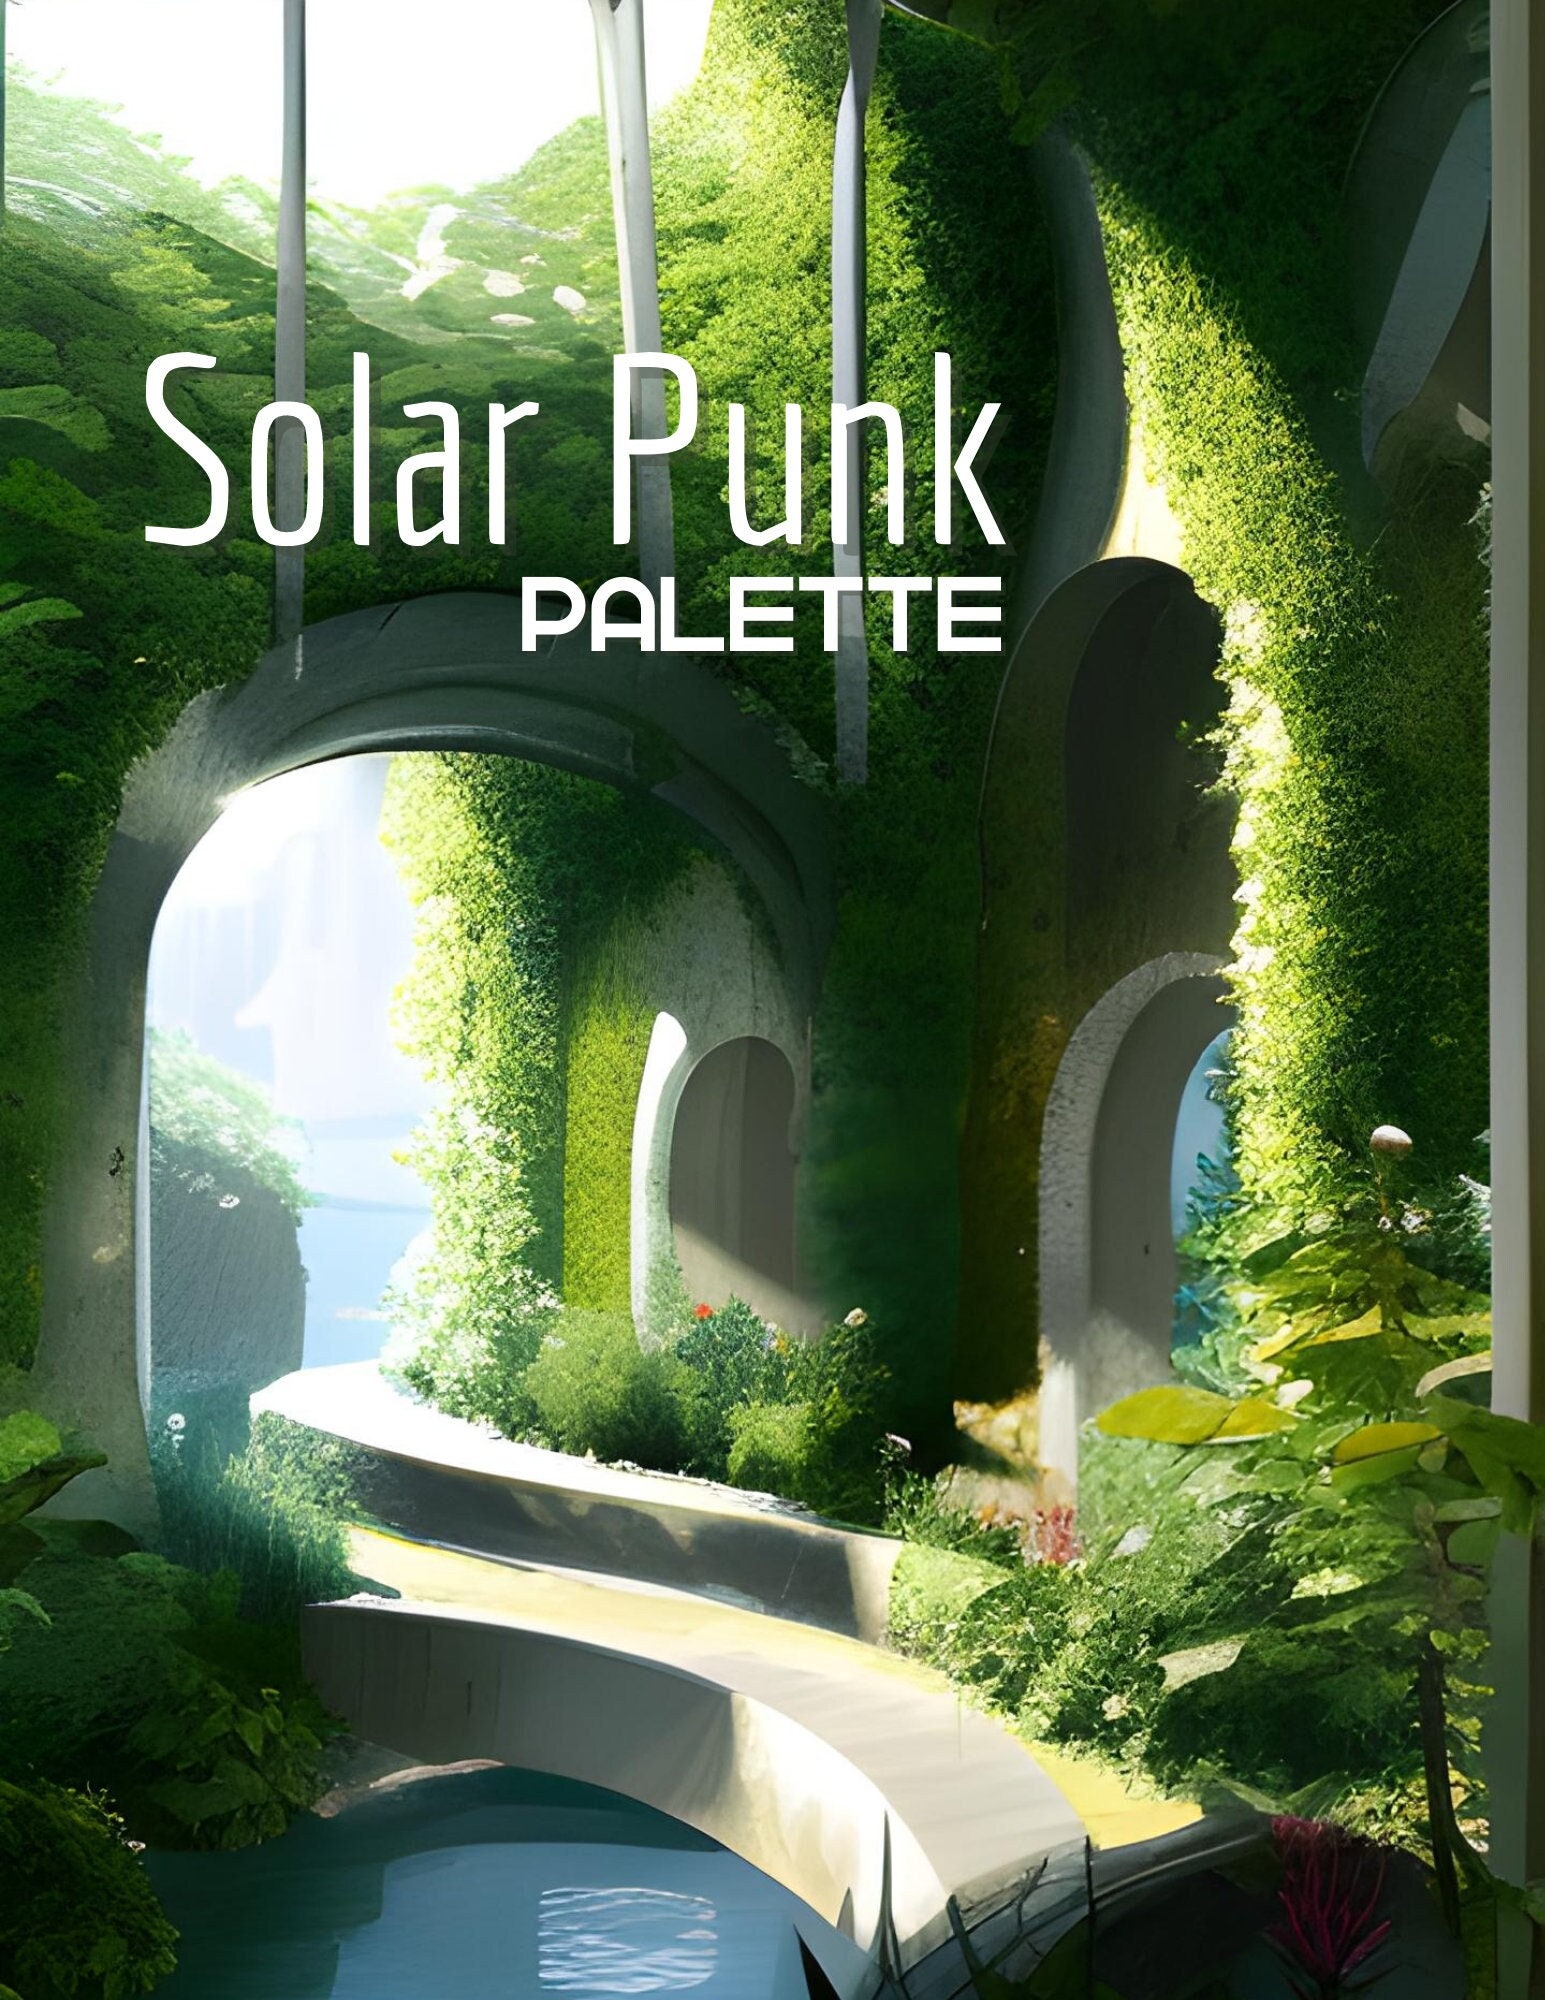 Solarpunk aesthetic? : r/videogames